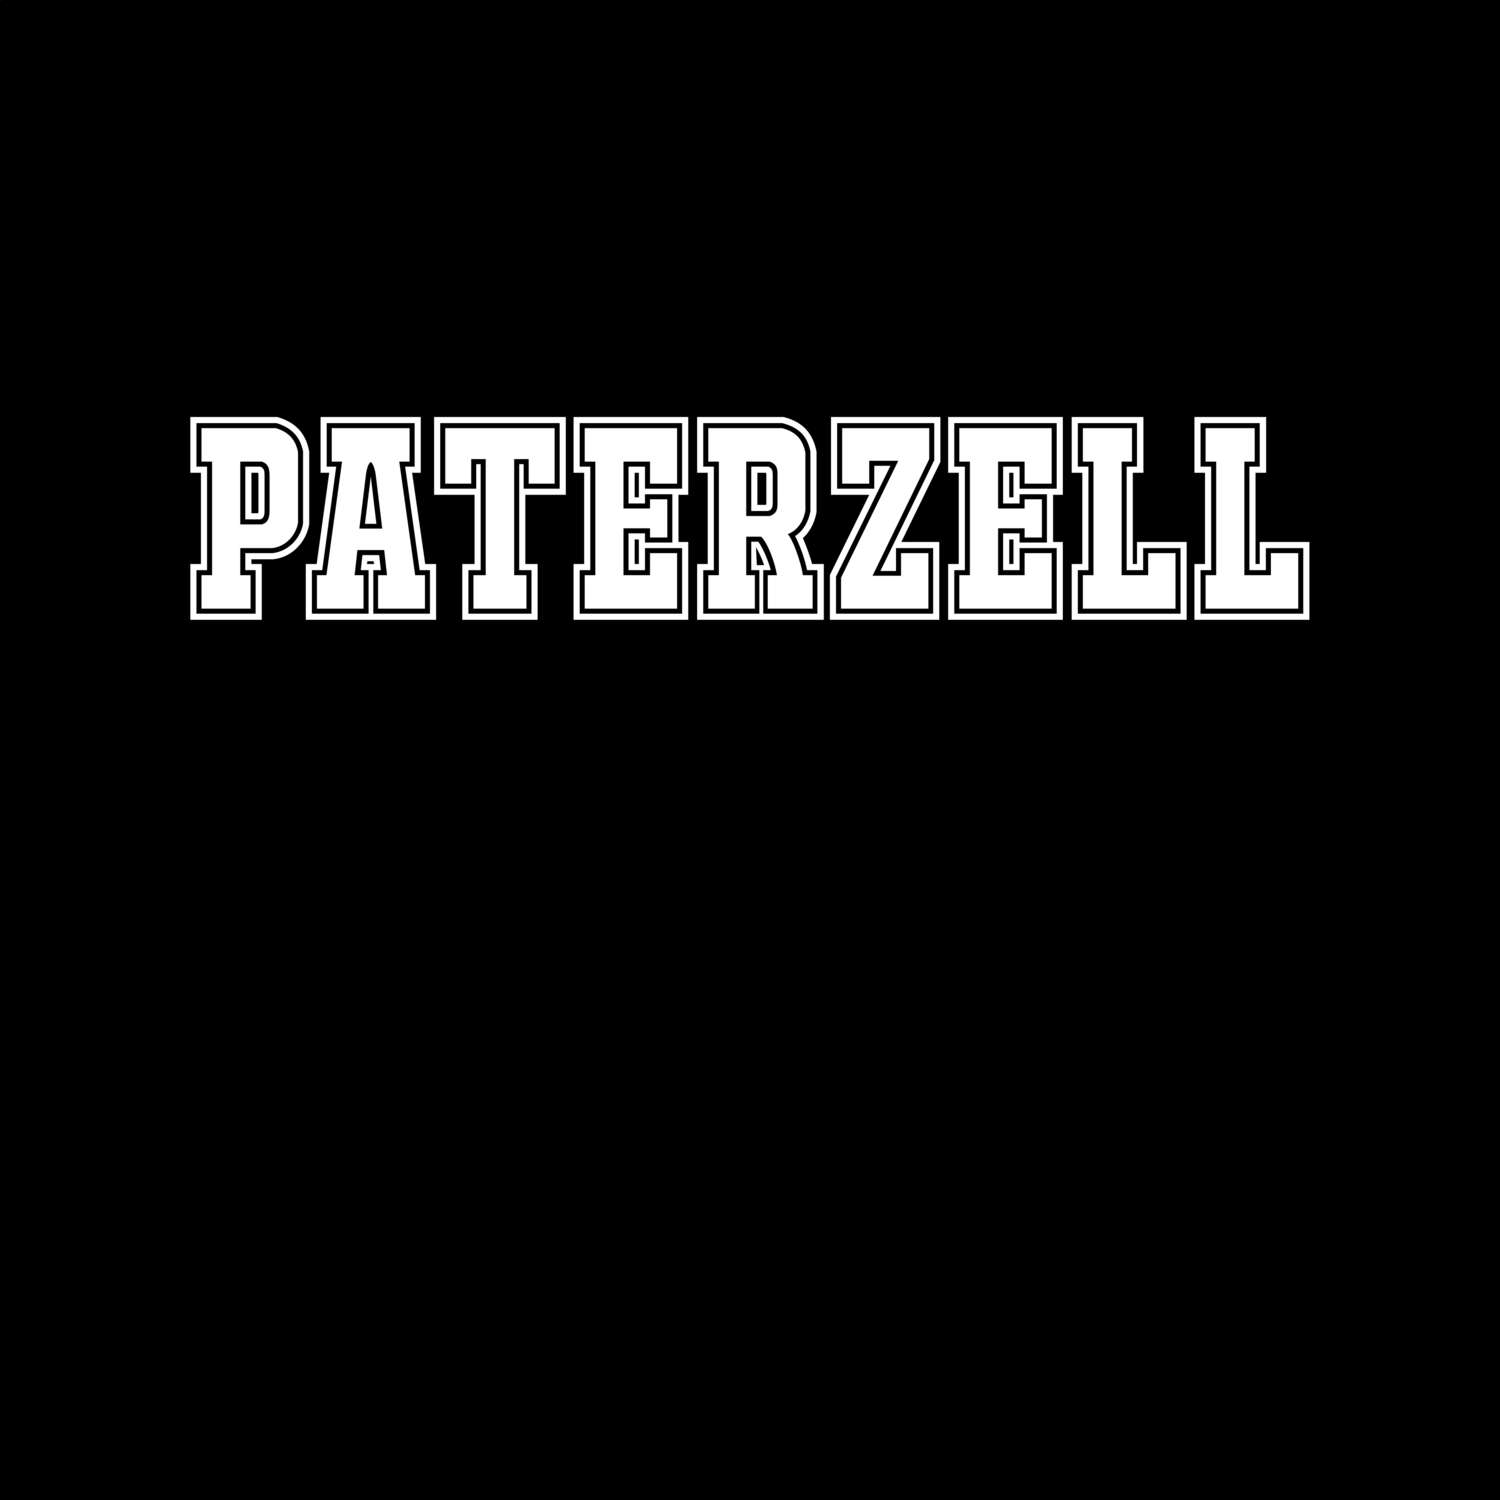 Paterzell T-Shirt »Classic«